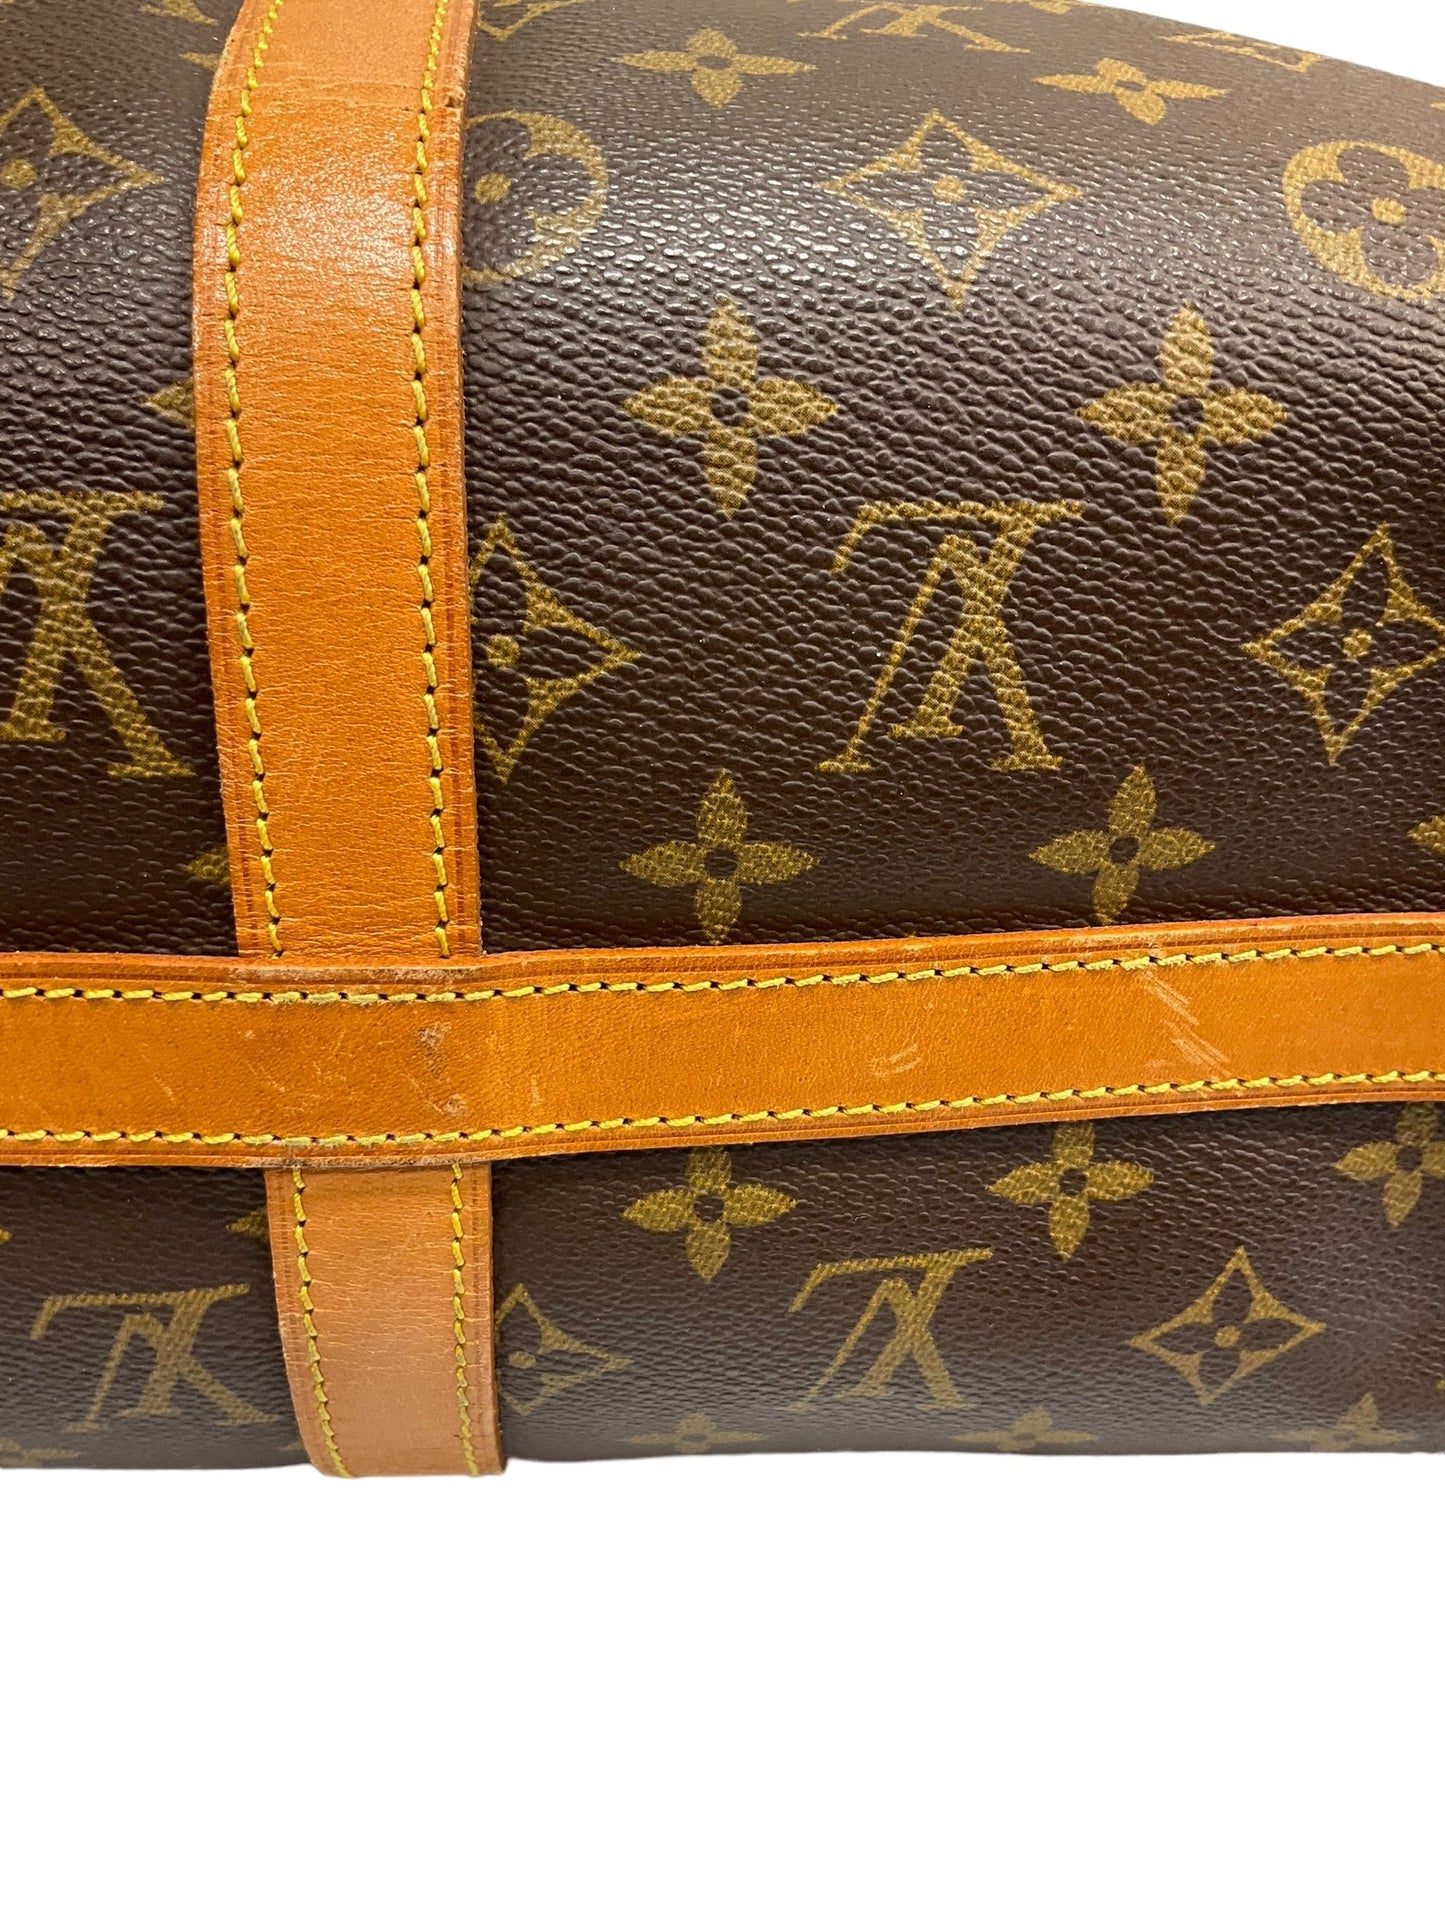 Handbag Luxury Designer Louis Vuitton, Size Large